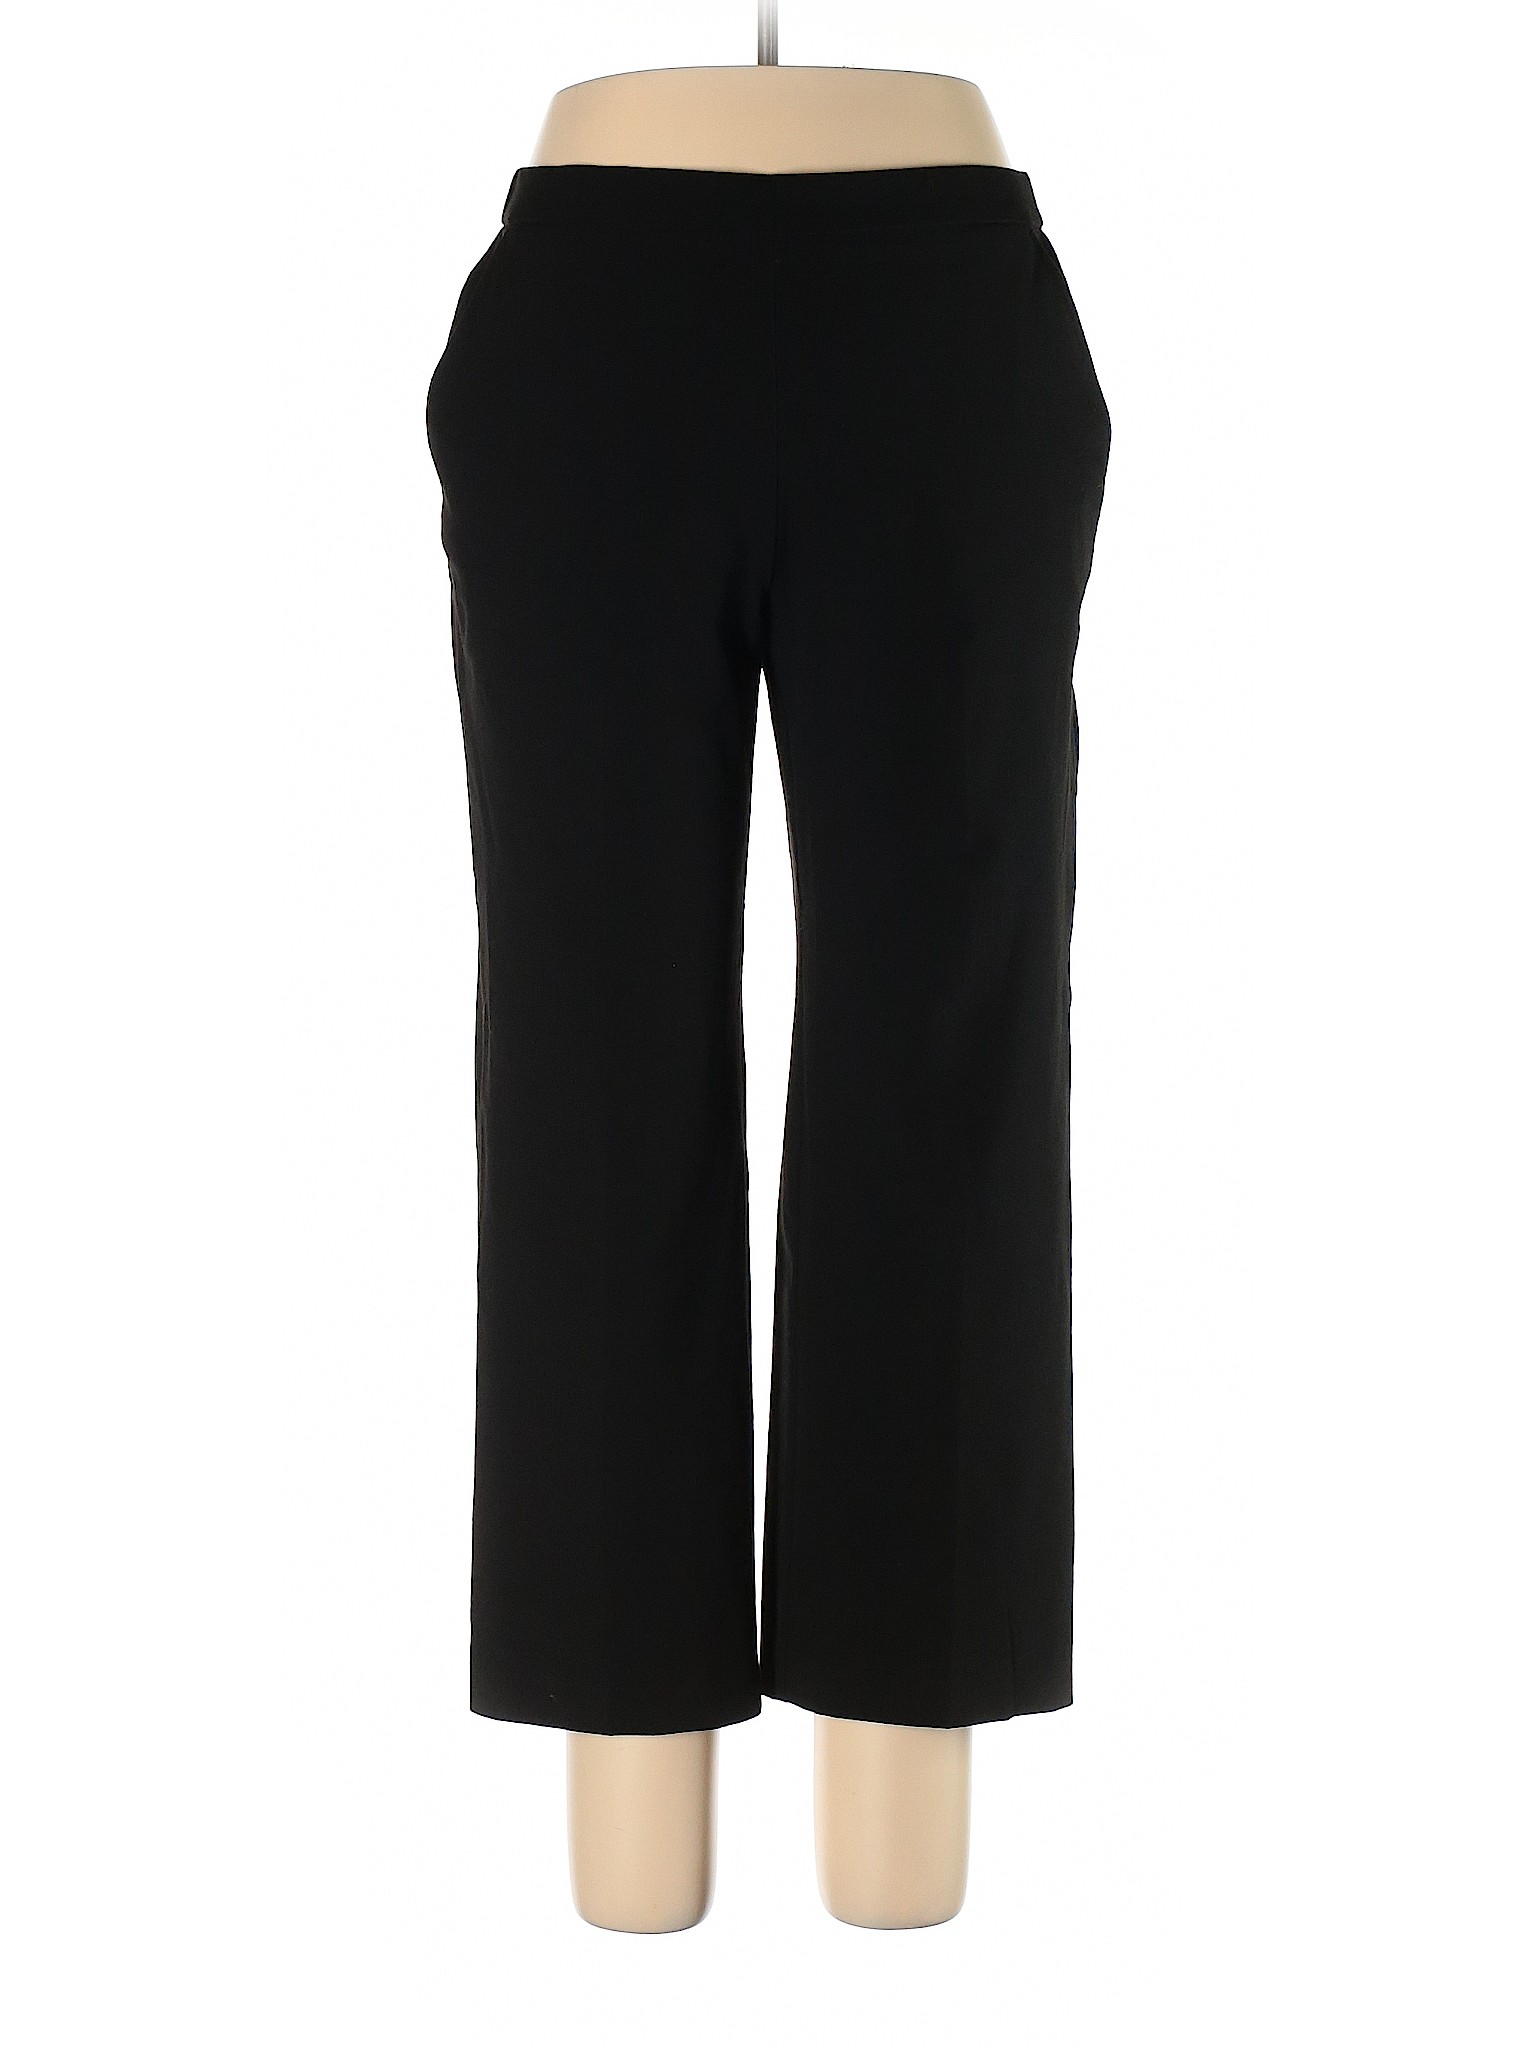 Sag Harbor Women Black Dress Pants 12 Petites | eBay